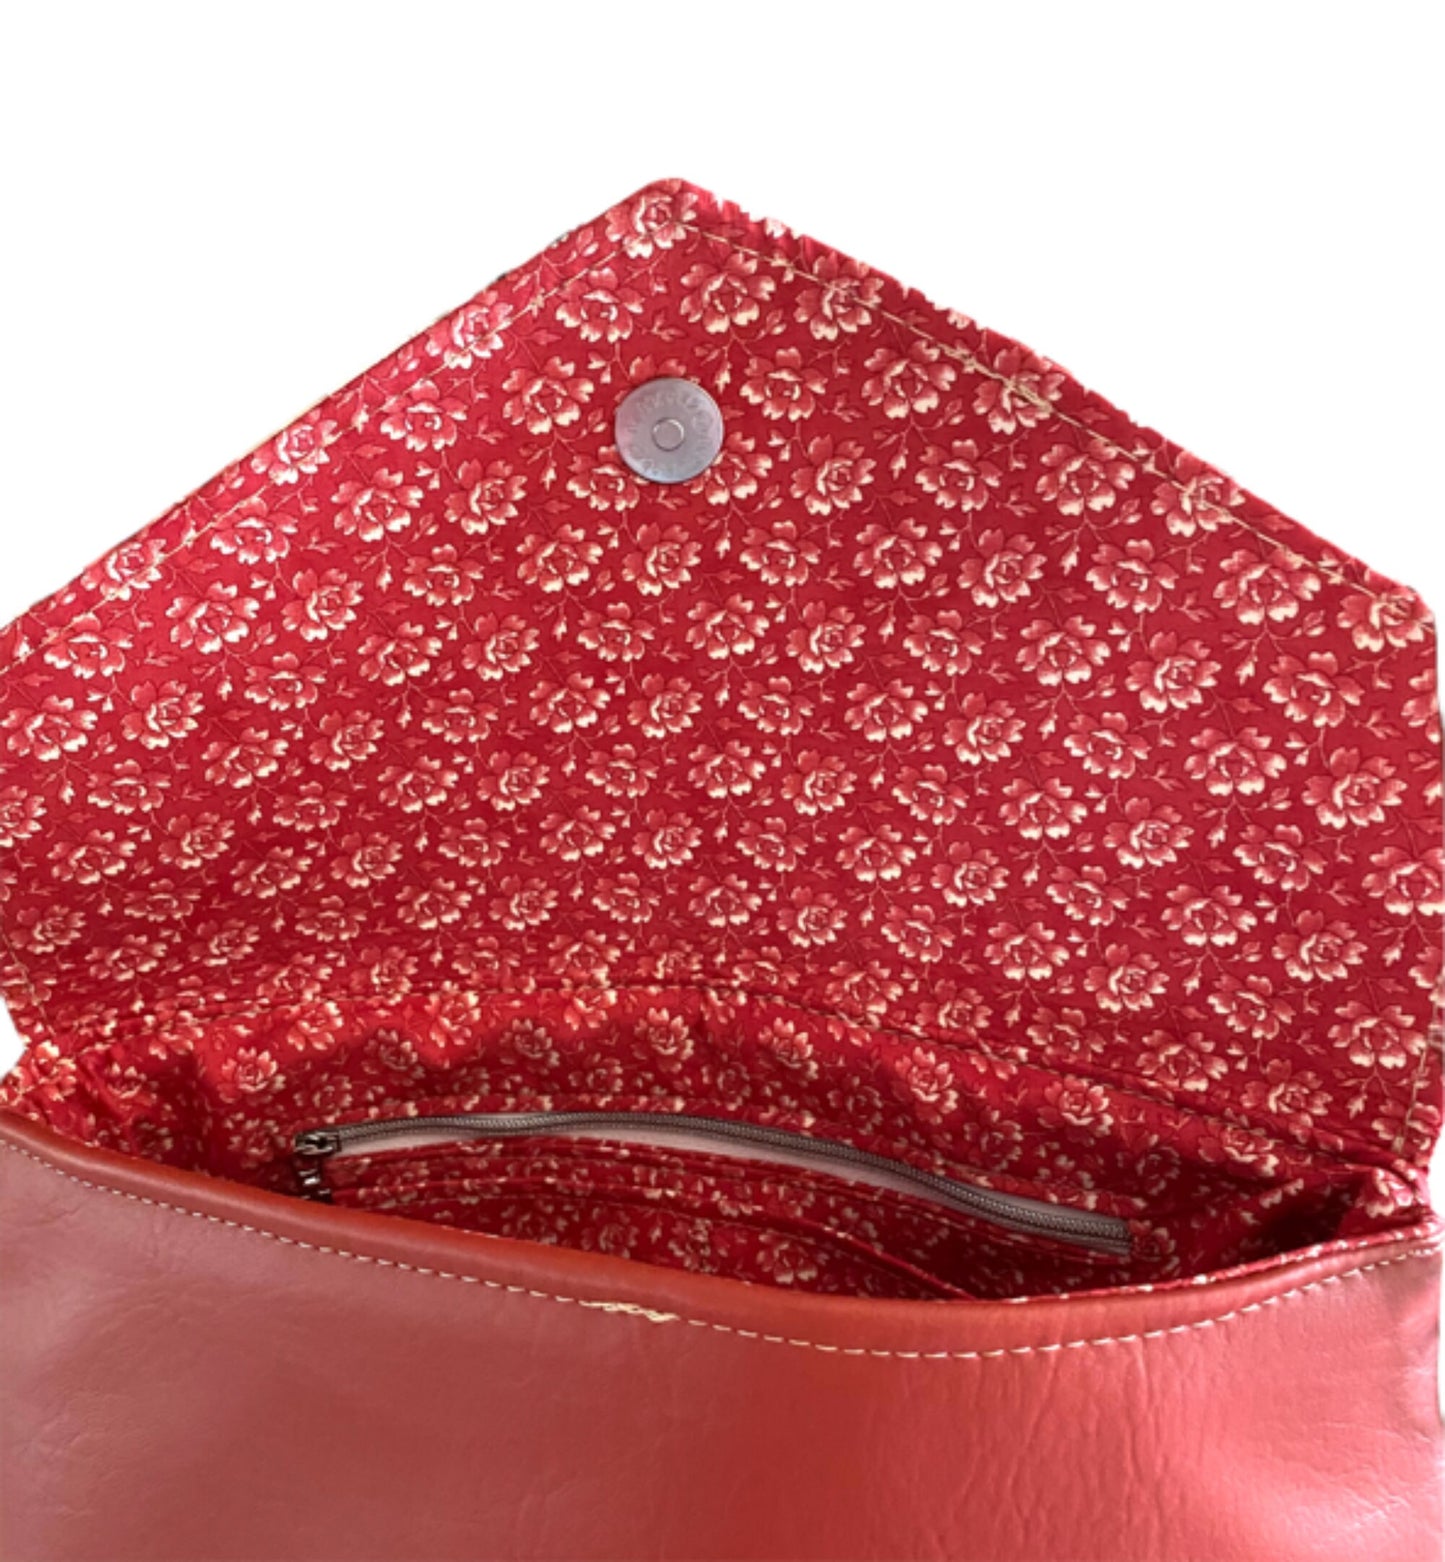 Handbag Purse Messenger Flip Top Floral Pinks Reds Vinyl Crossbody Strap